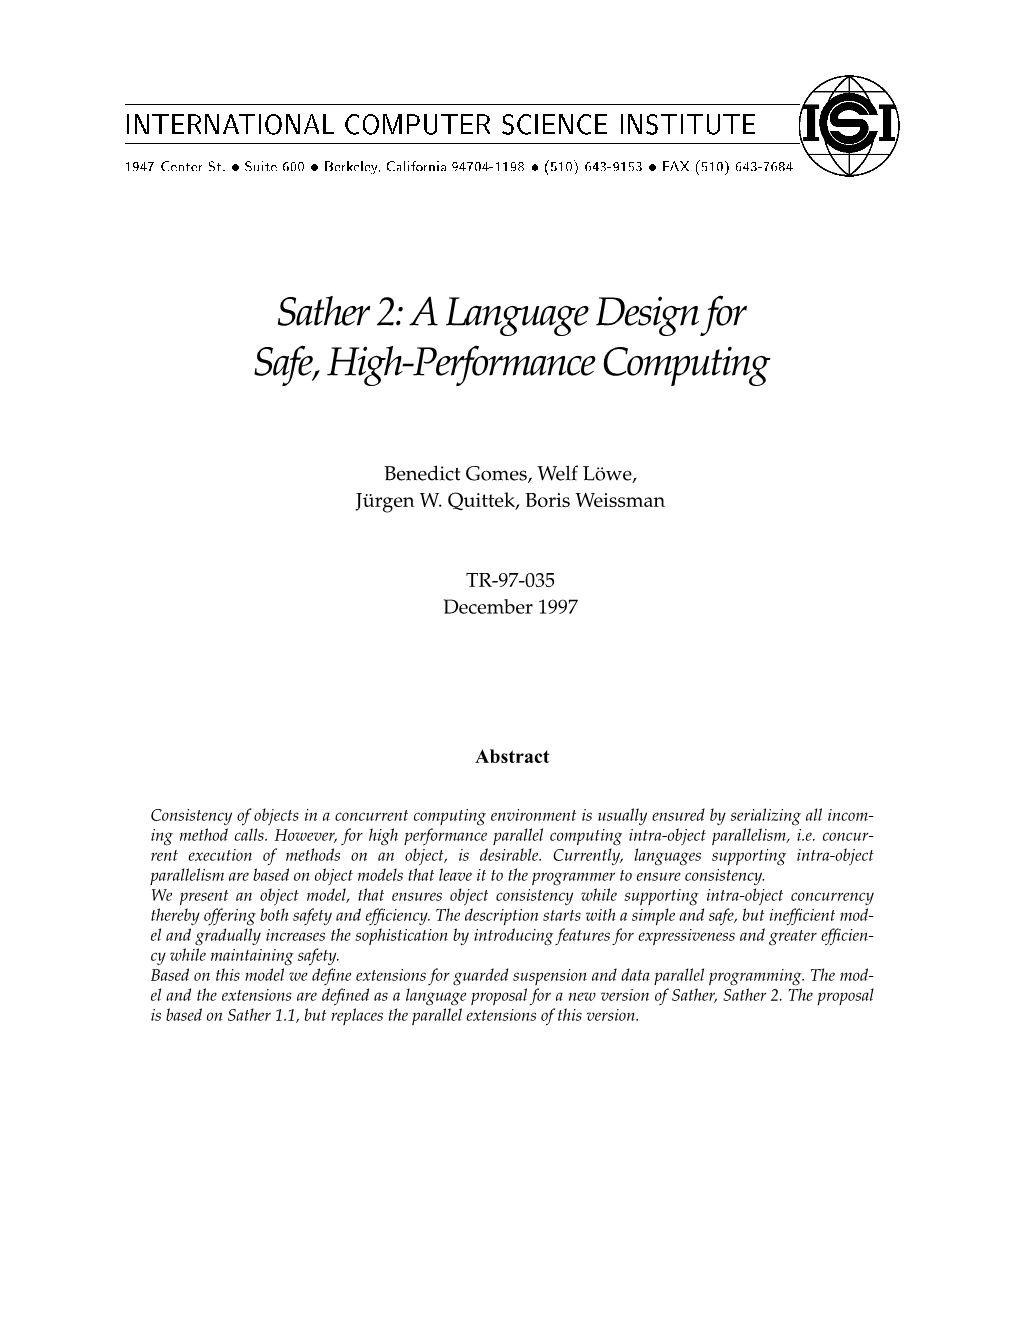 Sather 2: a Language Design for Safe, High-Performance Computing